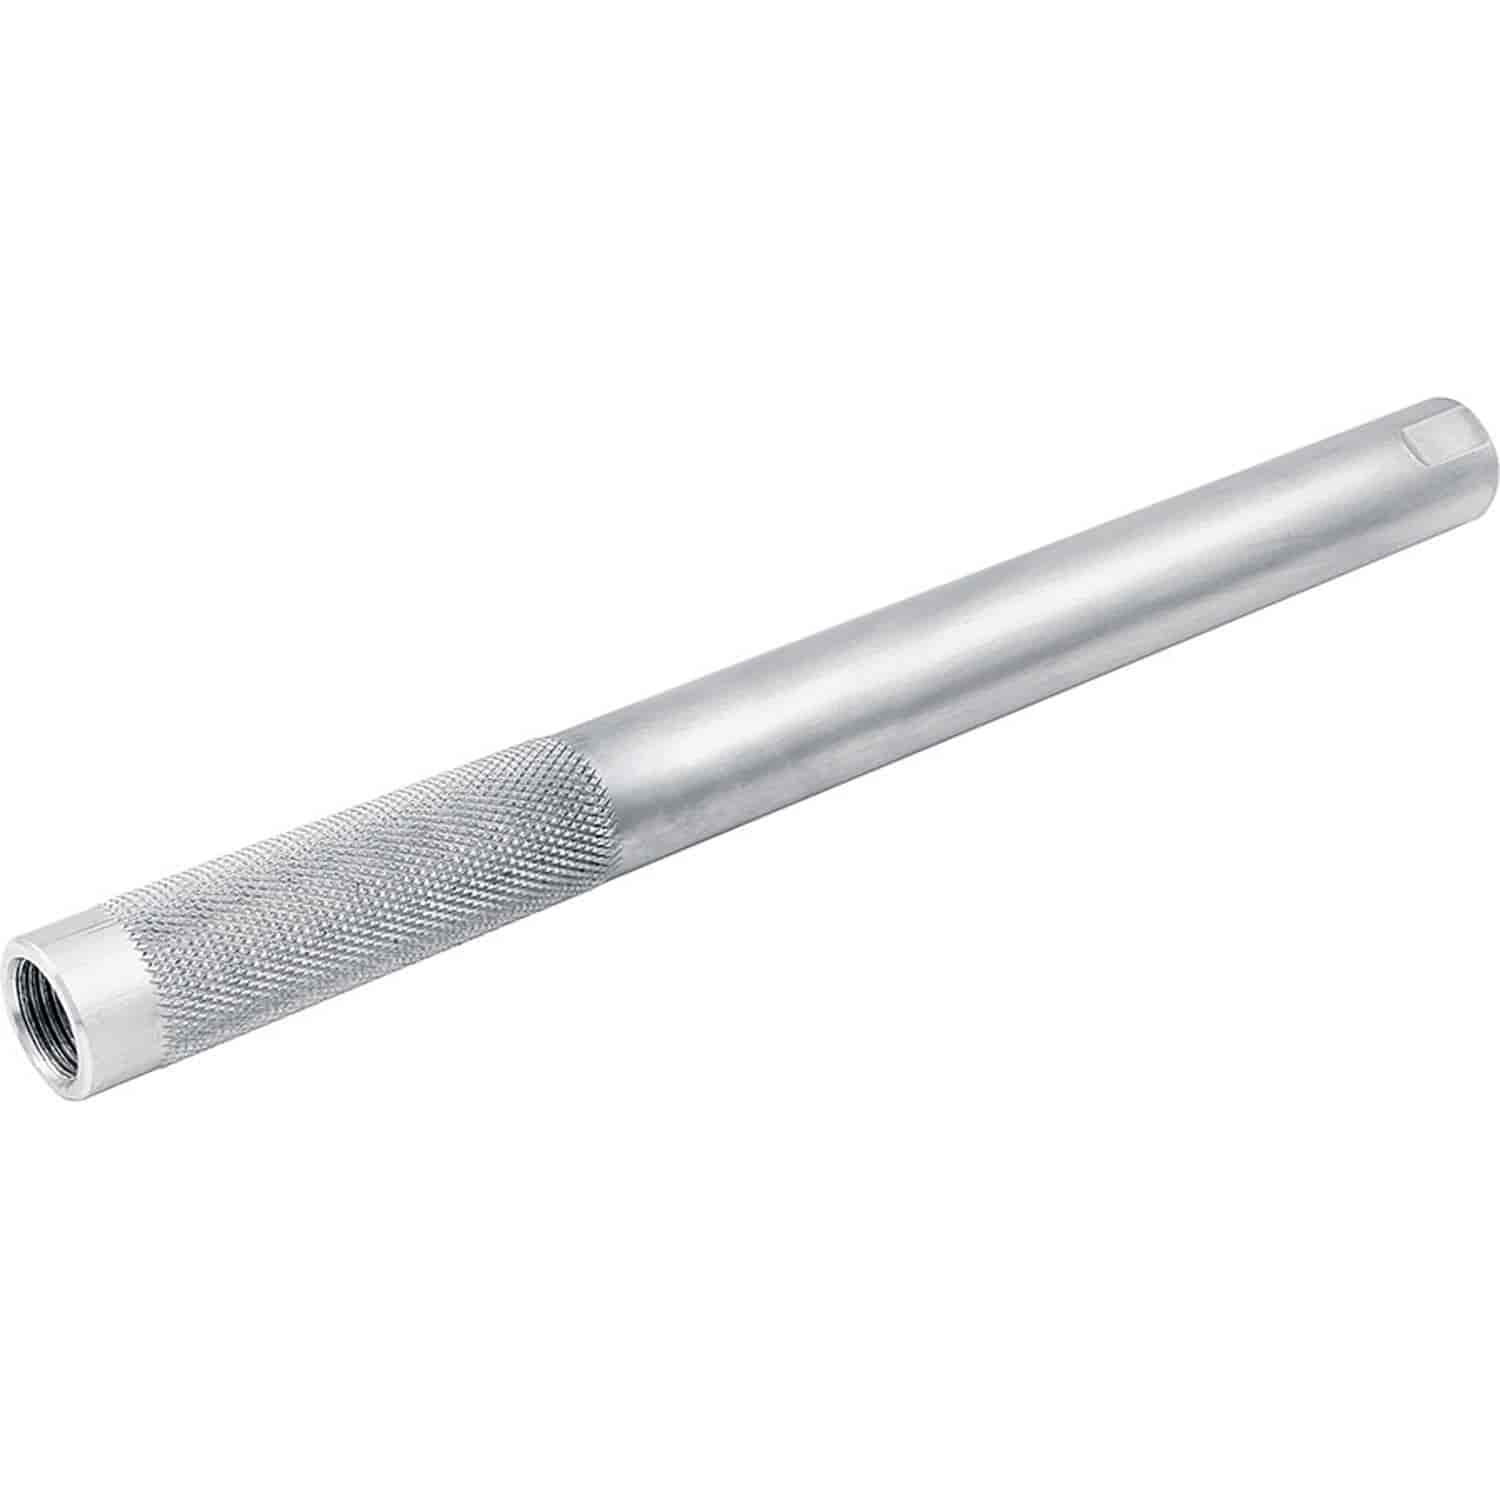 Swedged Aluminum Tie Rod Tube Length: 30"